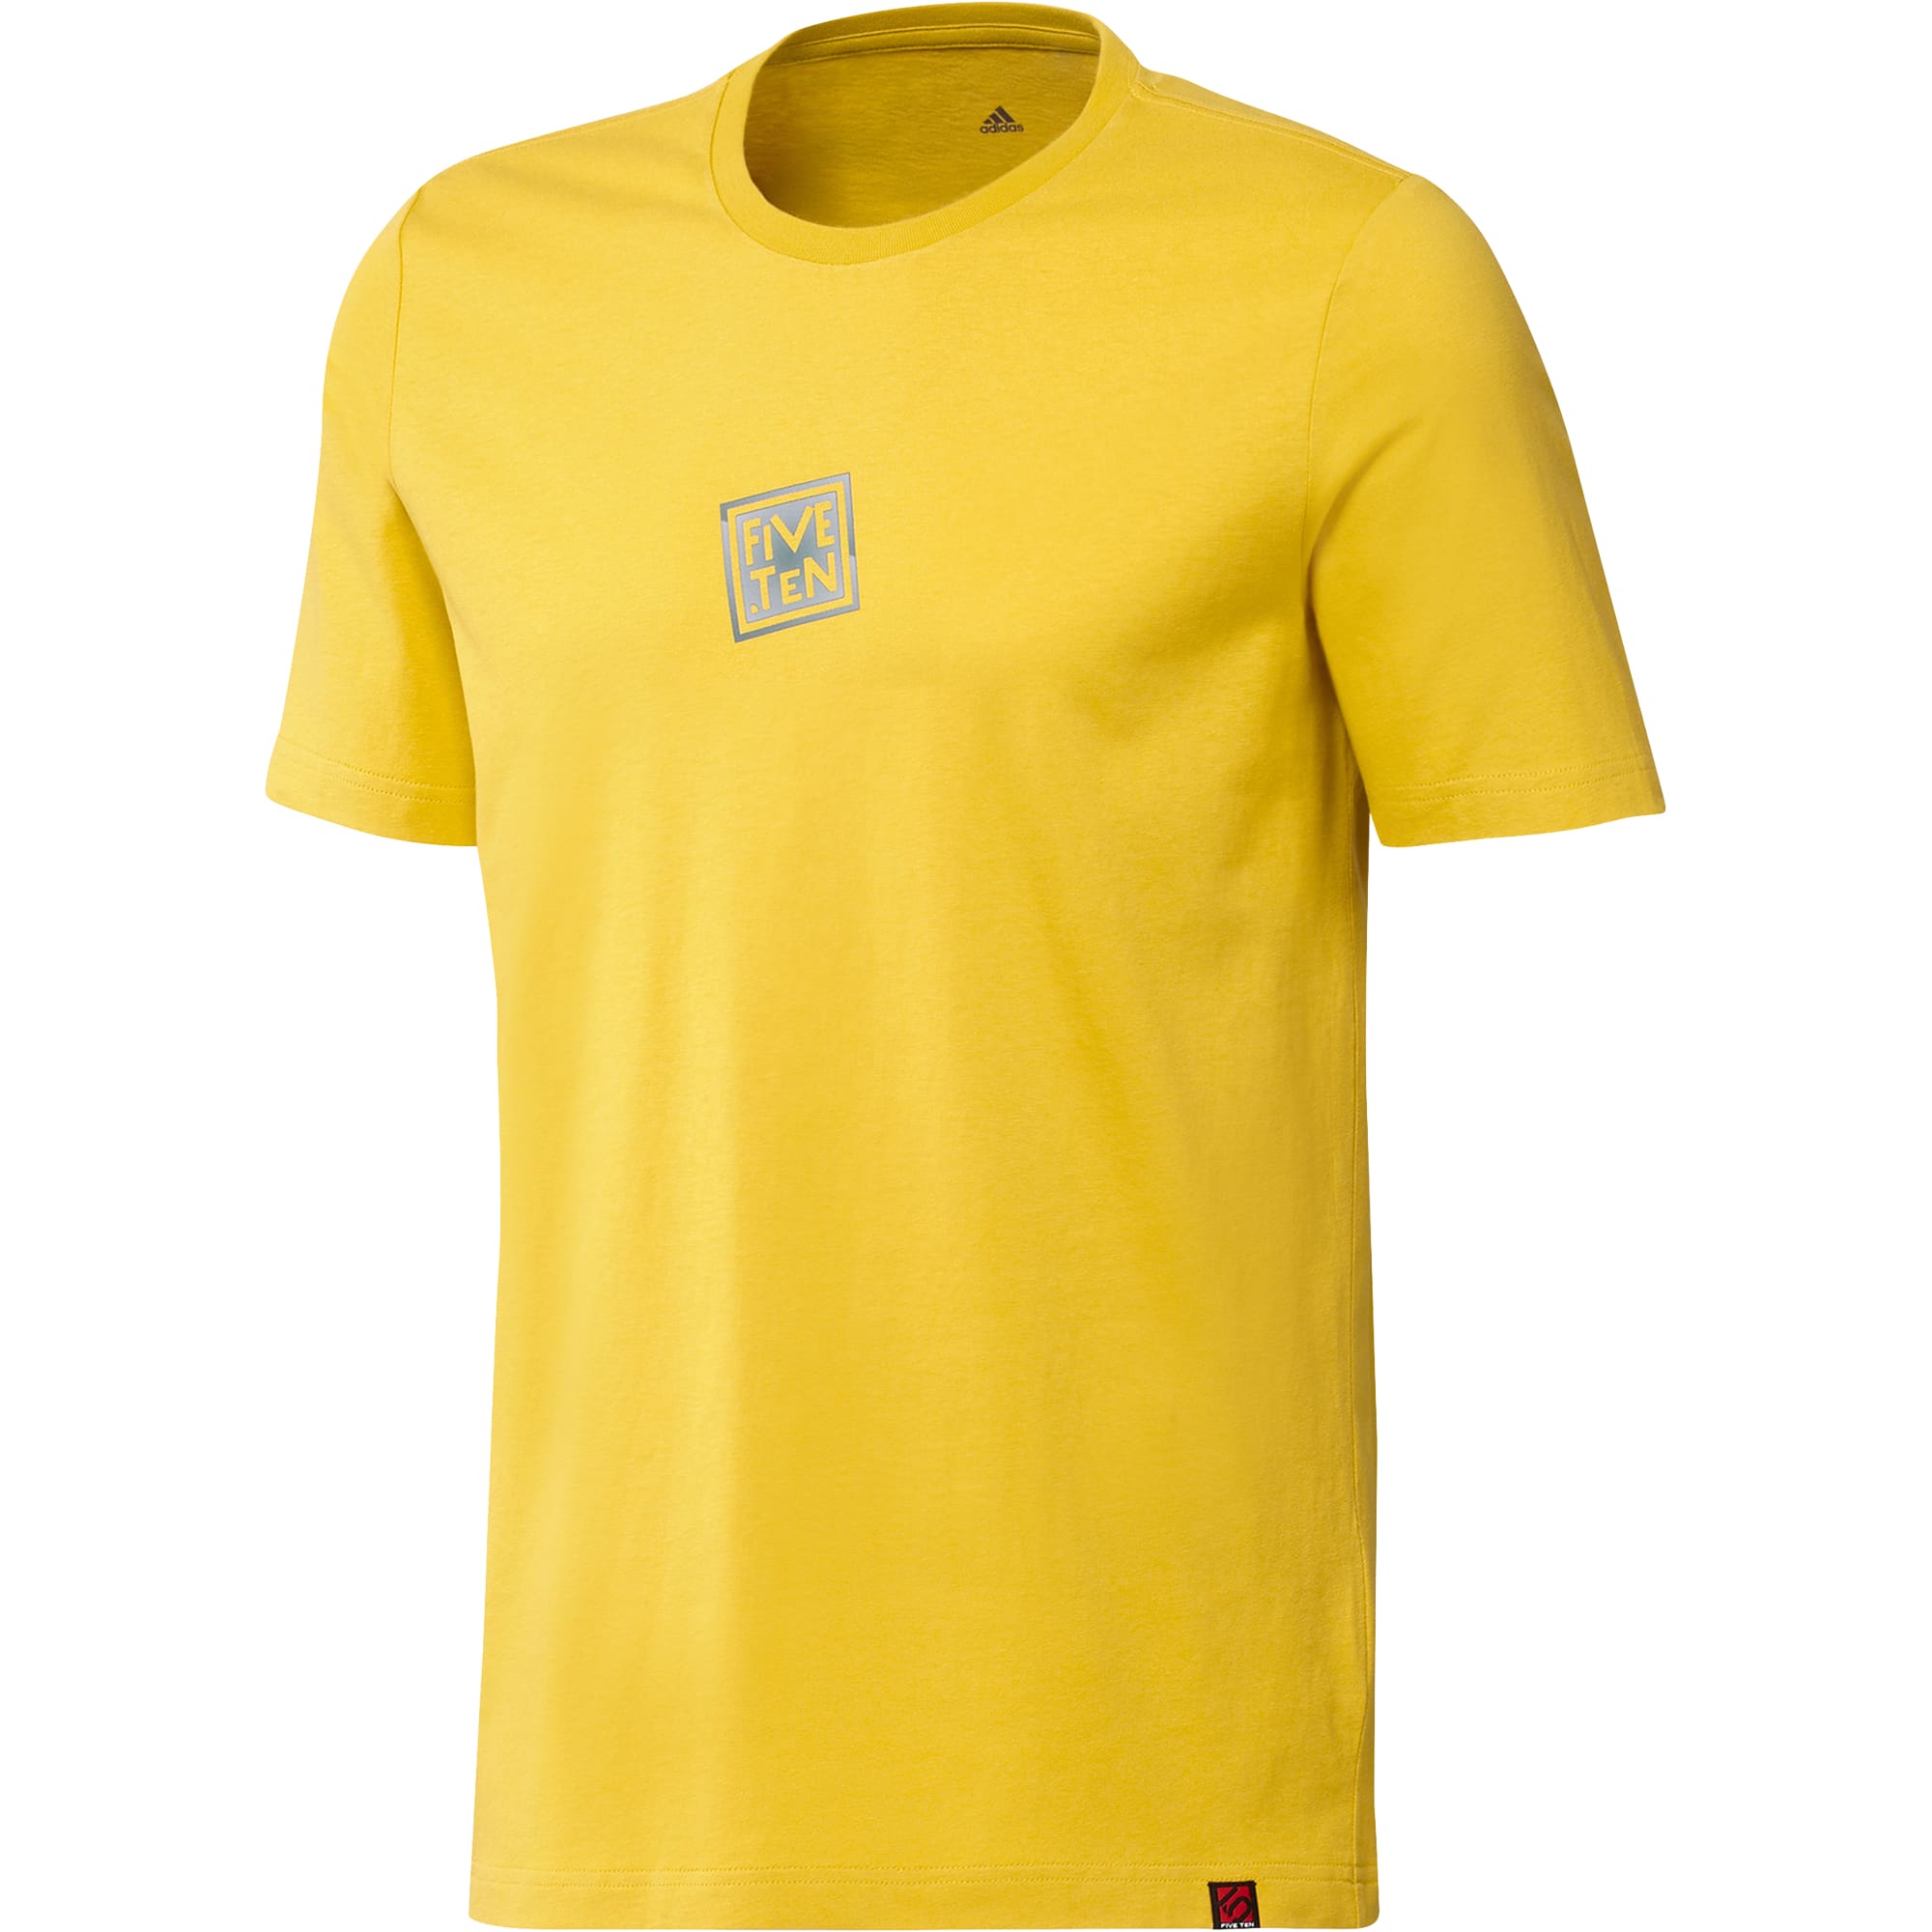 Adidas Adidas Men's 5.10 Heritage Logo Tee Hazy Yellow XS, Hazy Yellow